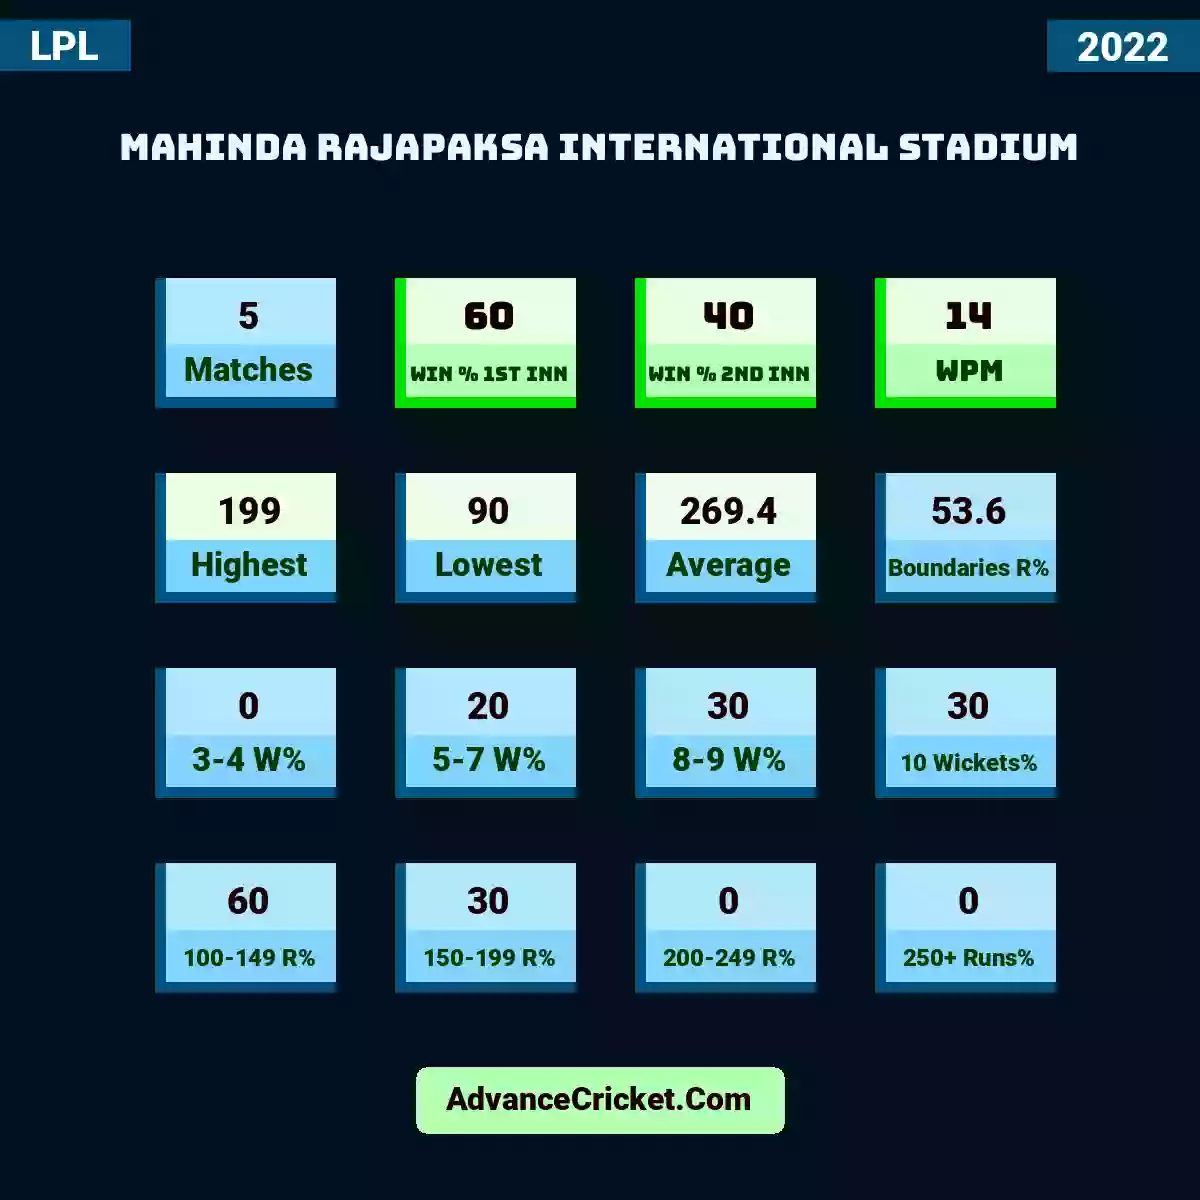 Image showing Mahinda Rajapaksa International Stadium with Matches: 5, Win % 1st Inn: 60, Win % 2nd Inn: 40, WPM: 14, Highest: 199, Lowest: 90, Average: 269.4, Boundaries R%: 53.6, 3-4 W%: 0, 5-7 W%: 20, 8-9 W%: 30, 10 Wickets%: 30, 100-149 R%: 60, 150-199 R%: 30, 200-249 R%: 0, 250+ Runs%: 0.